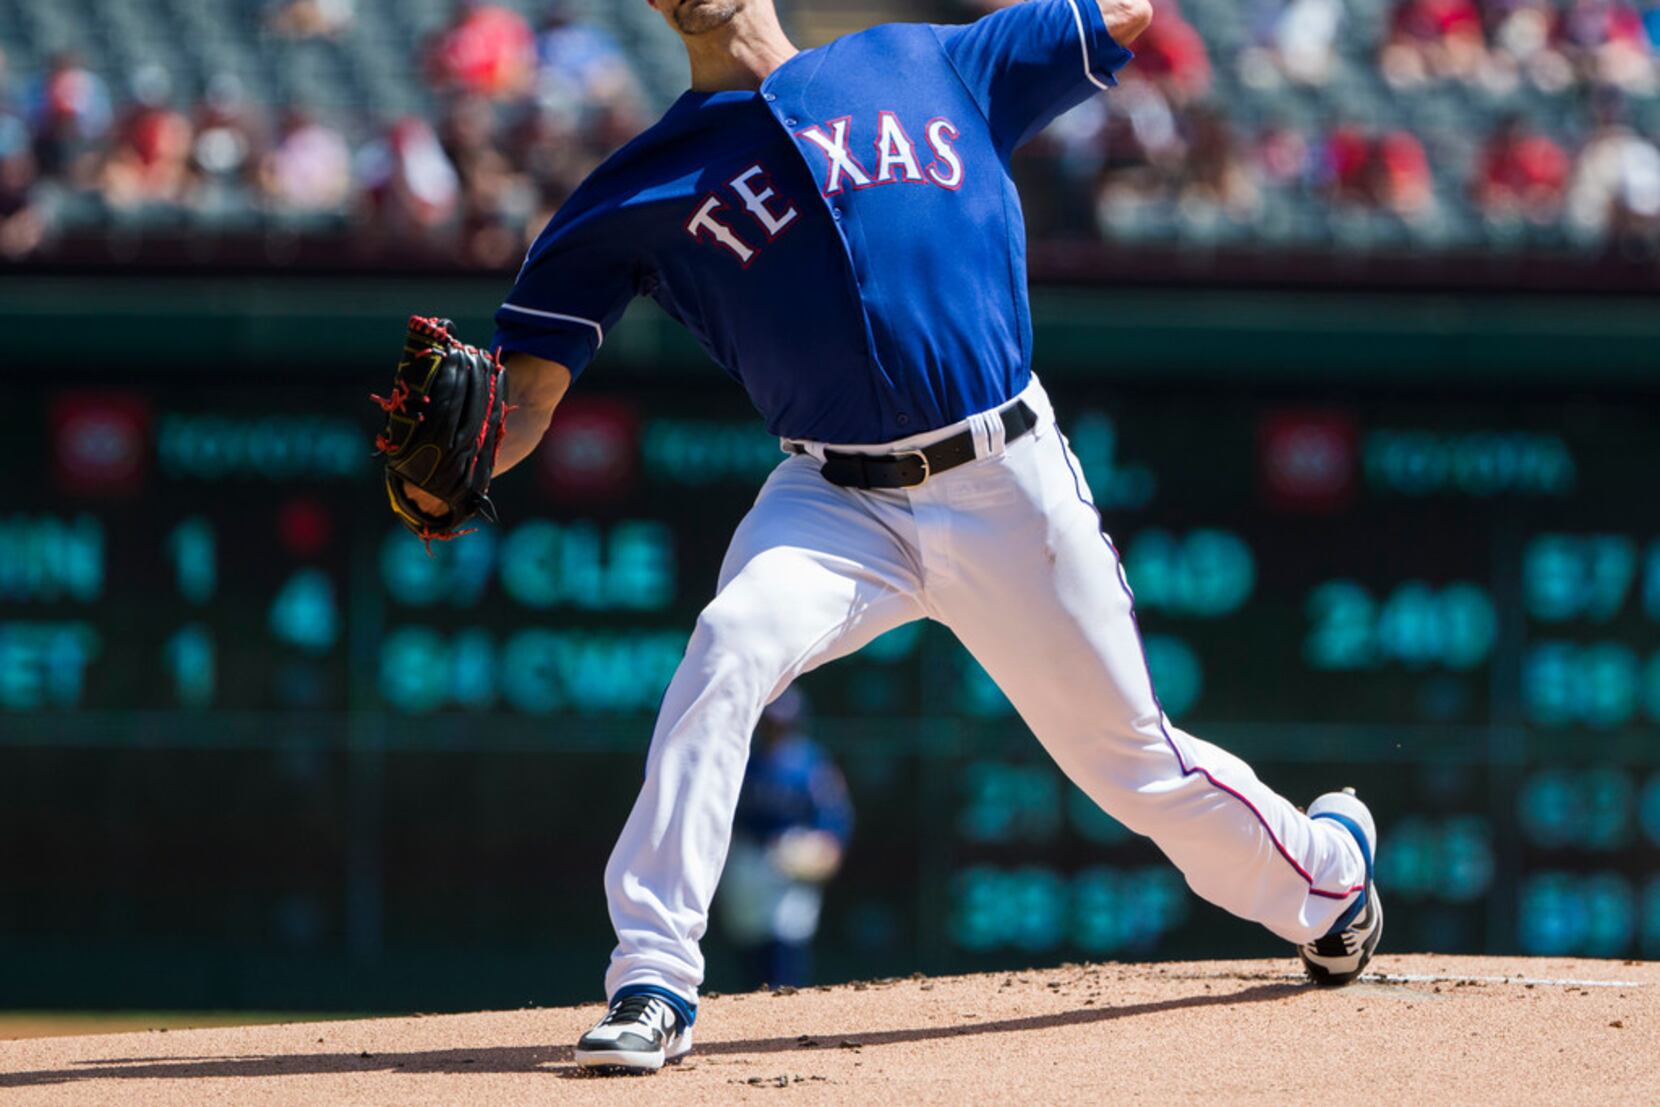 Six-time Gold Glove winner joins Texas Rangers staff as minor